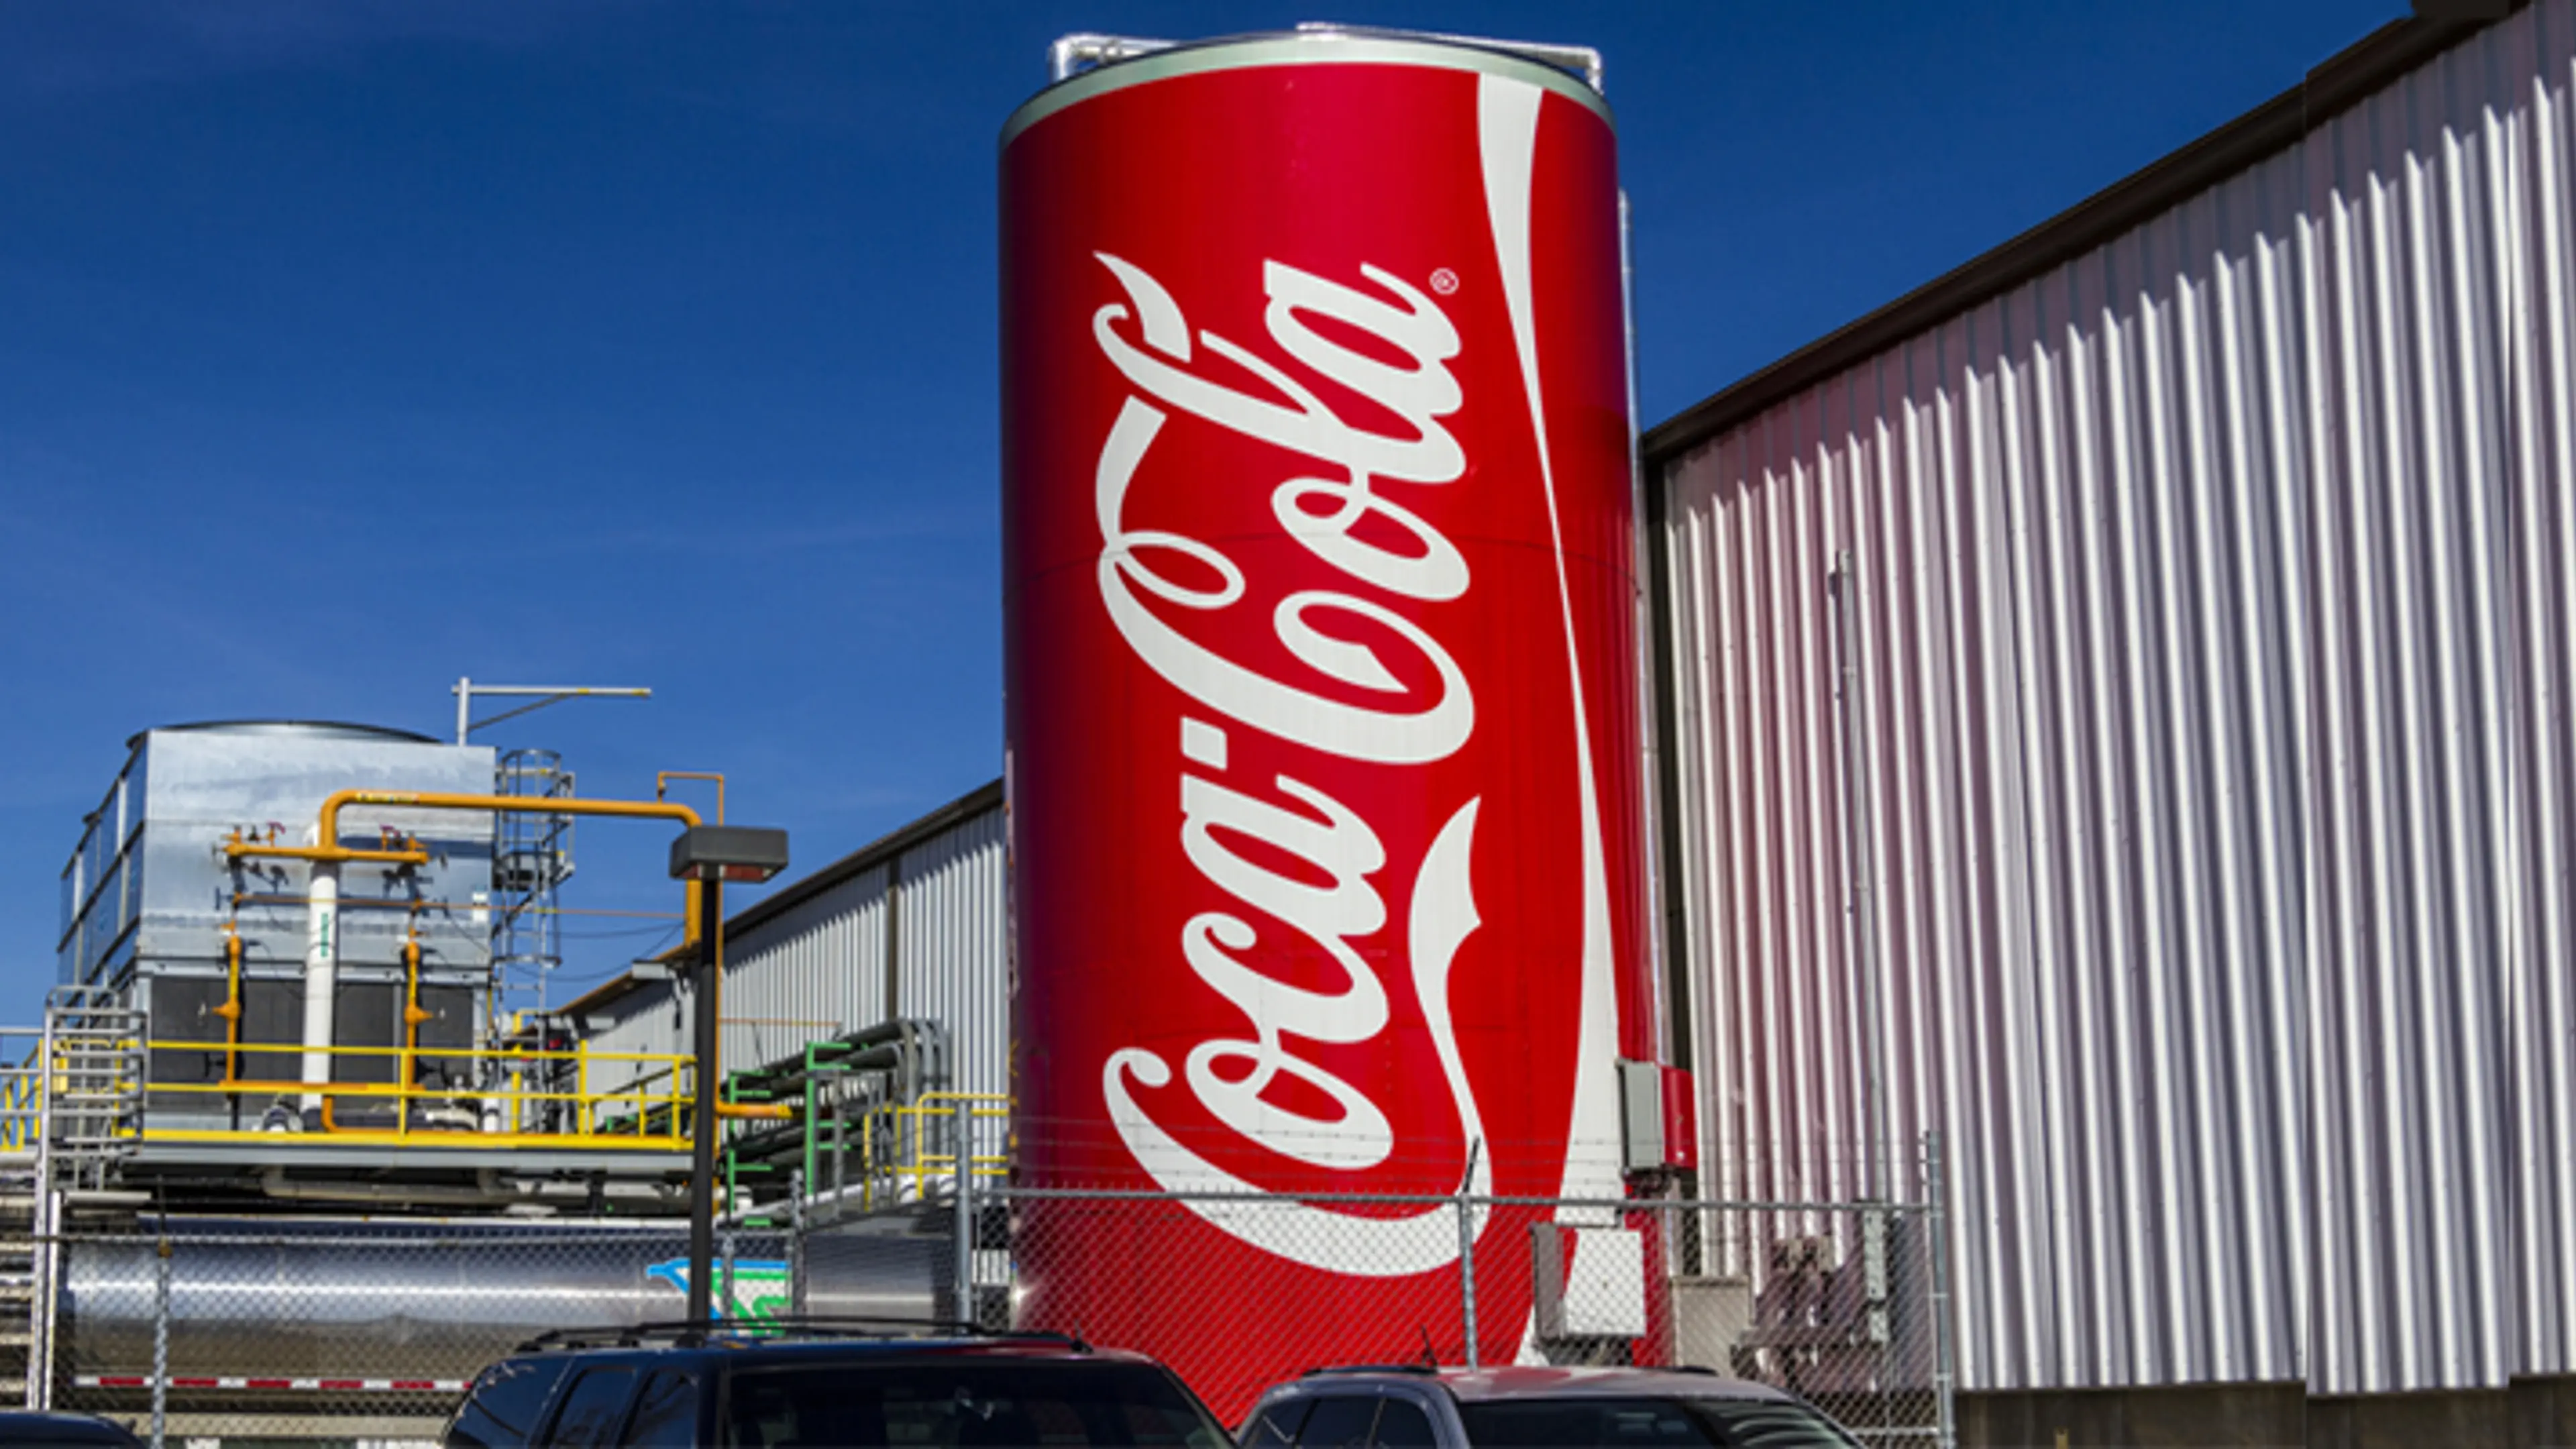 Coca-Cola India joins ONDC, launches Coke Shop marketplace